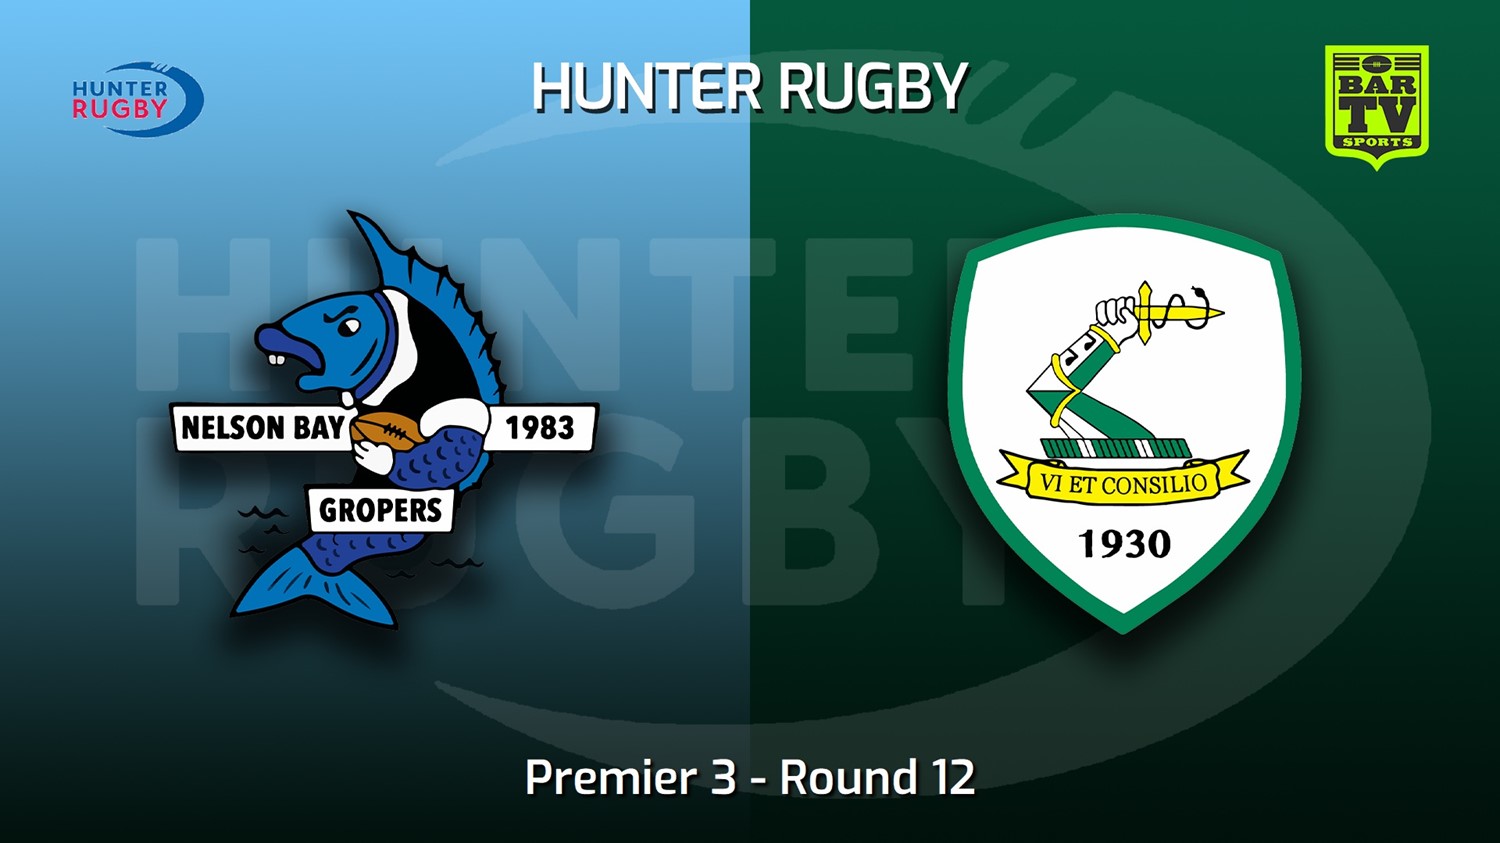 220716-Hunter Rugby Round 12 - Premier 3 - Nelson Bay Gropers v Merewether Carlton Slate Image